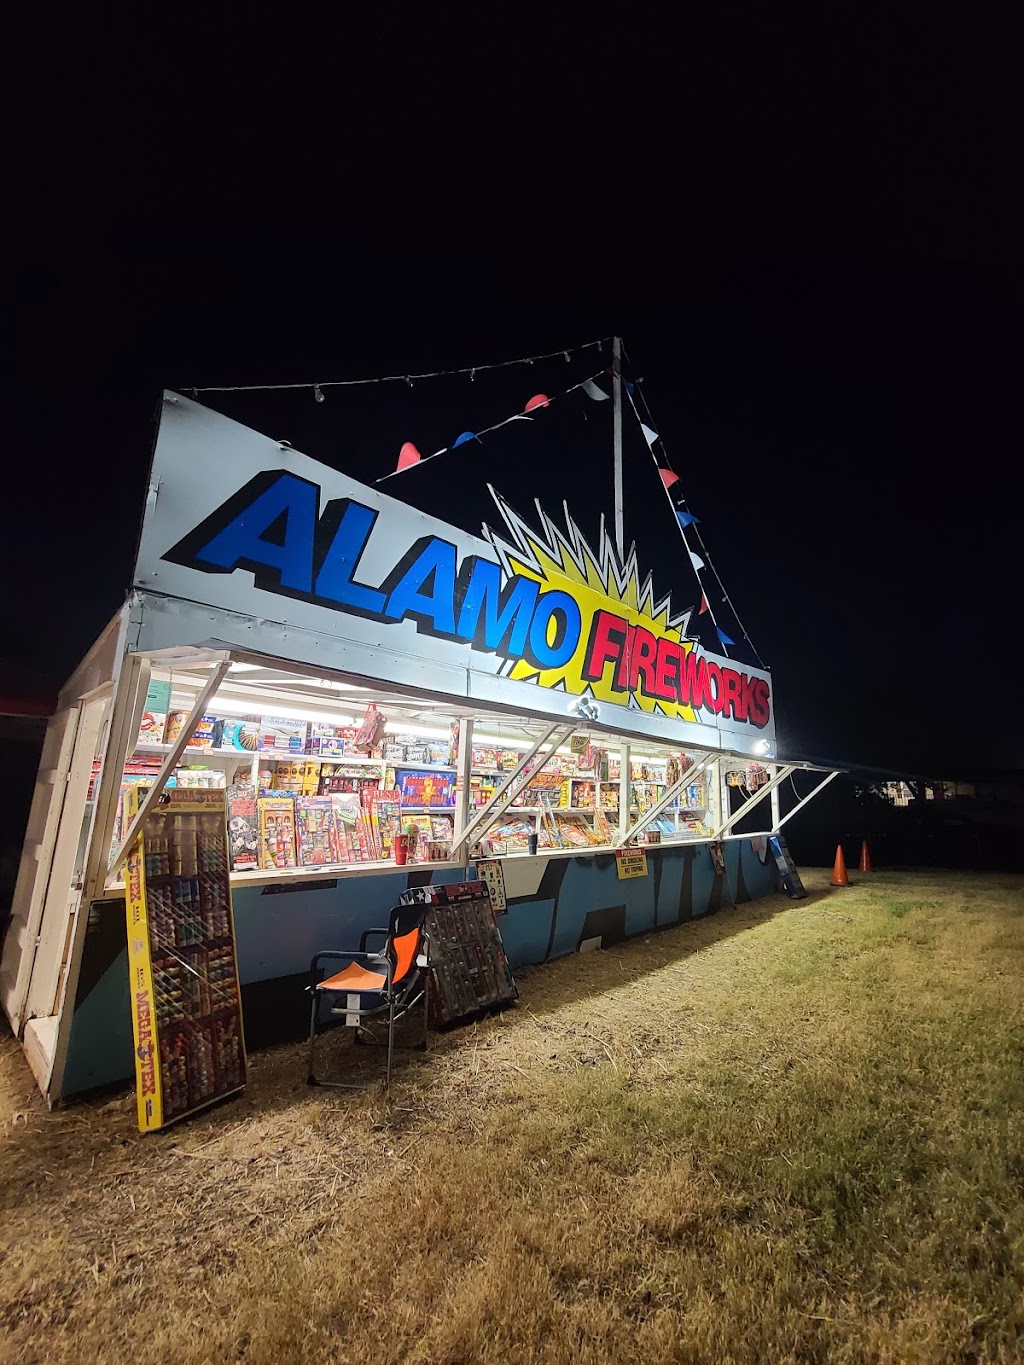 Alamo Fireworks Stand | 151 Watson Ln E, New Braunfels, TX 78130, USA | Phone: (210) 667-1106